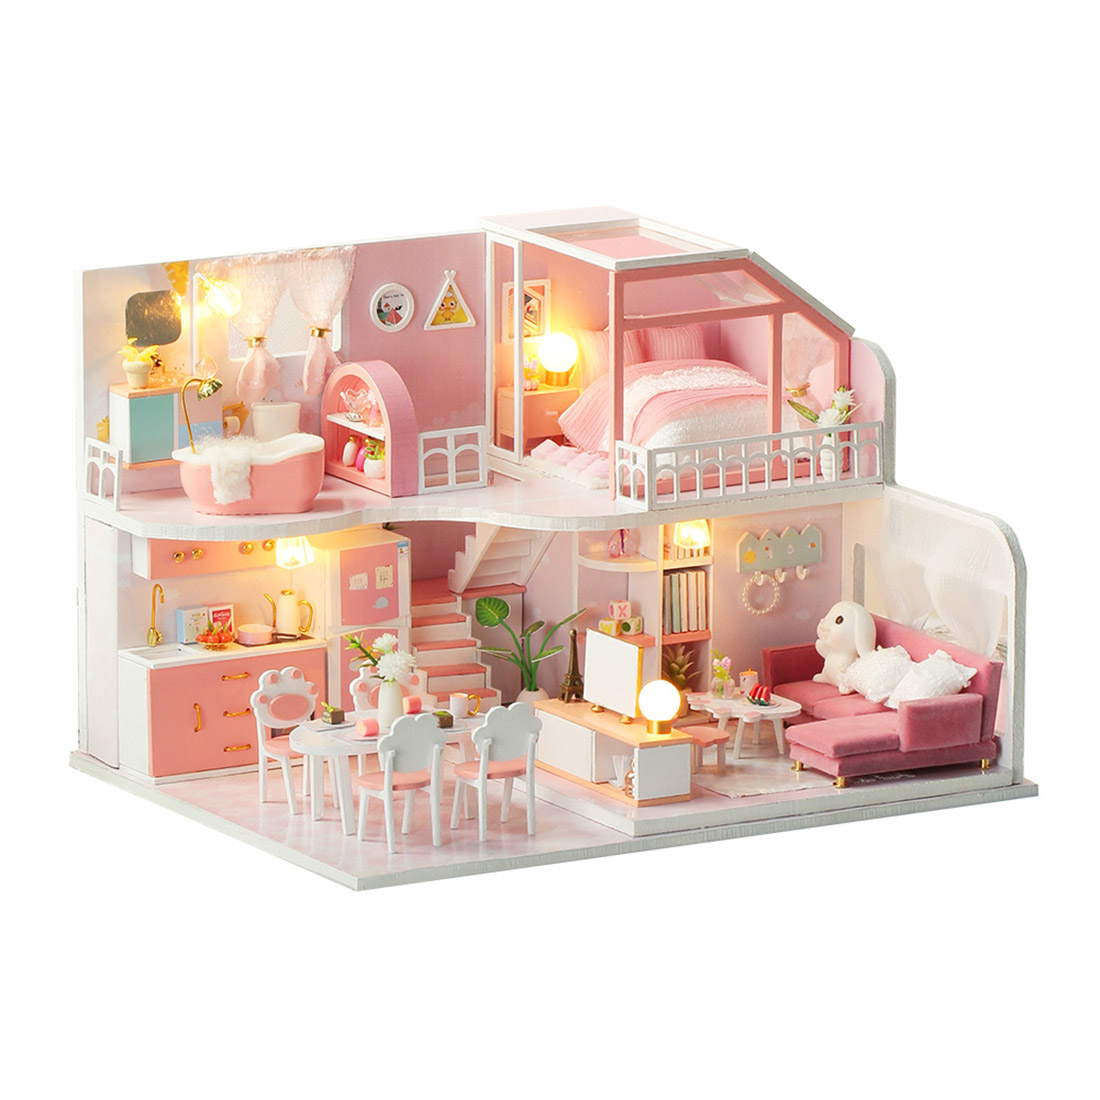 Cozy Bedroom 3D DIY Assembly Miniature Art Cottage Model Kit Creative Ornament Christmas Gift (Light Pink)